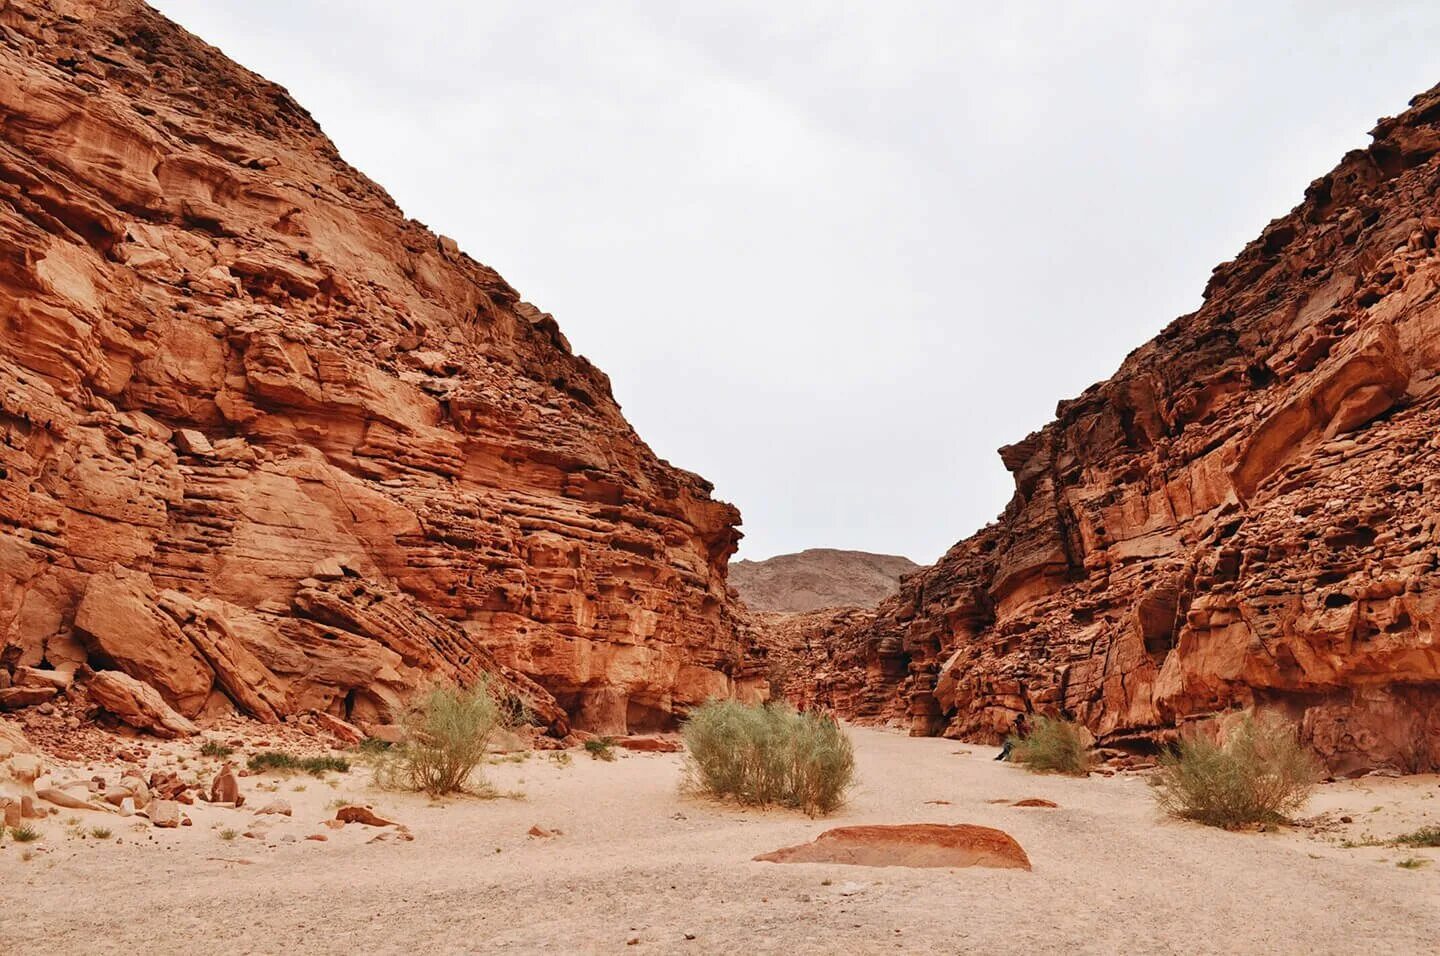 Каньон Салама Египет. Нувейба Египет каньон. Красный каньон Египет Синай. Цветной каньон Салама в Египте. Каньон шарм эль шейх